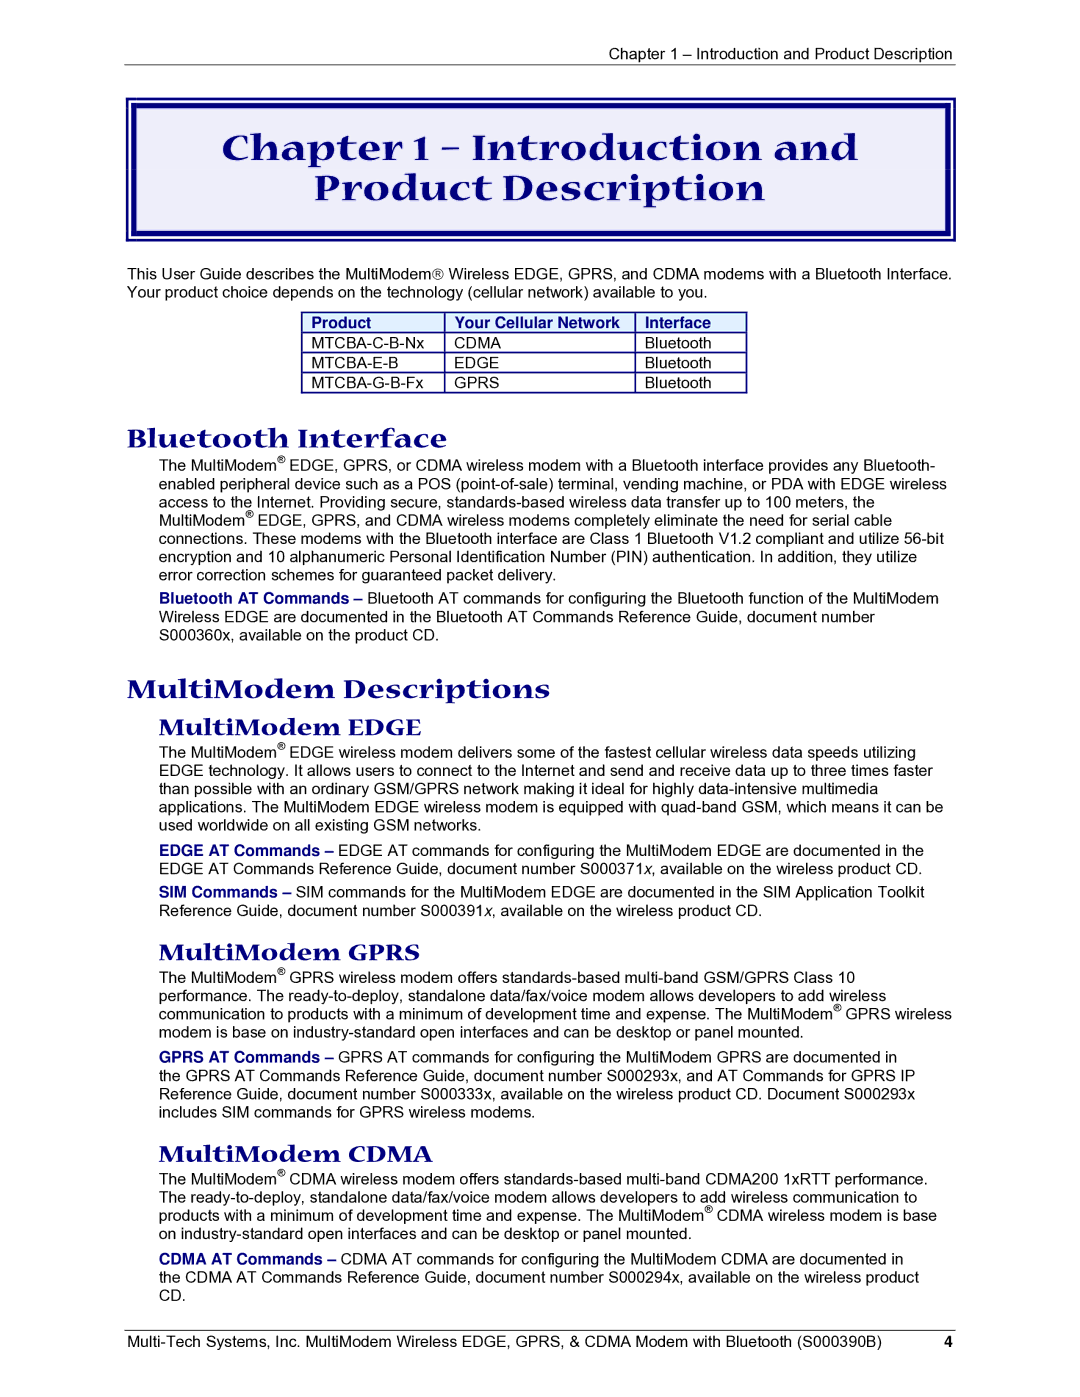 Multi-Tech Systems manual Introduction Product Description, Bluetooth Interface, MultiModem Descriptions 